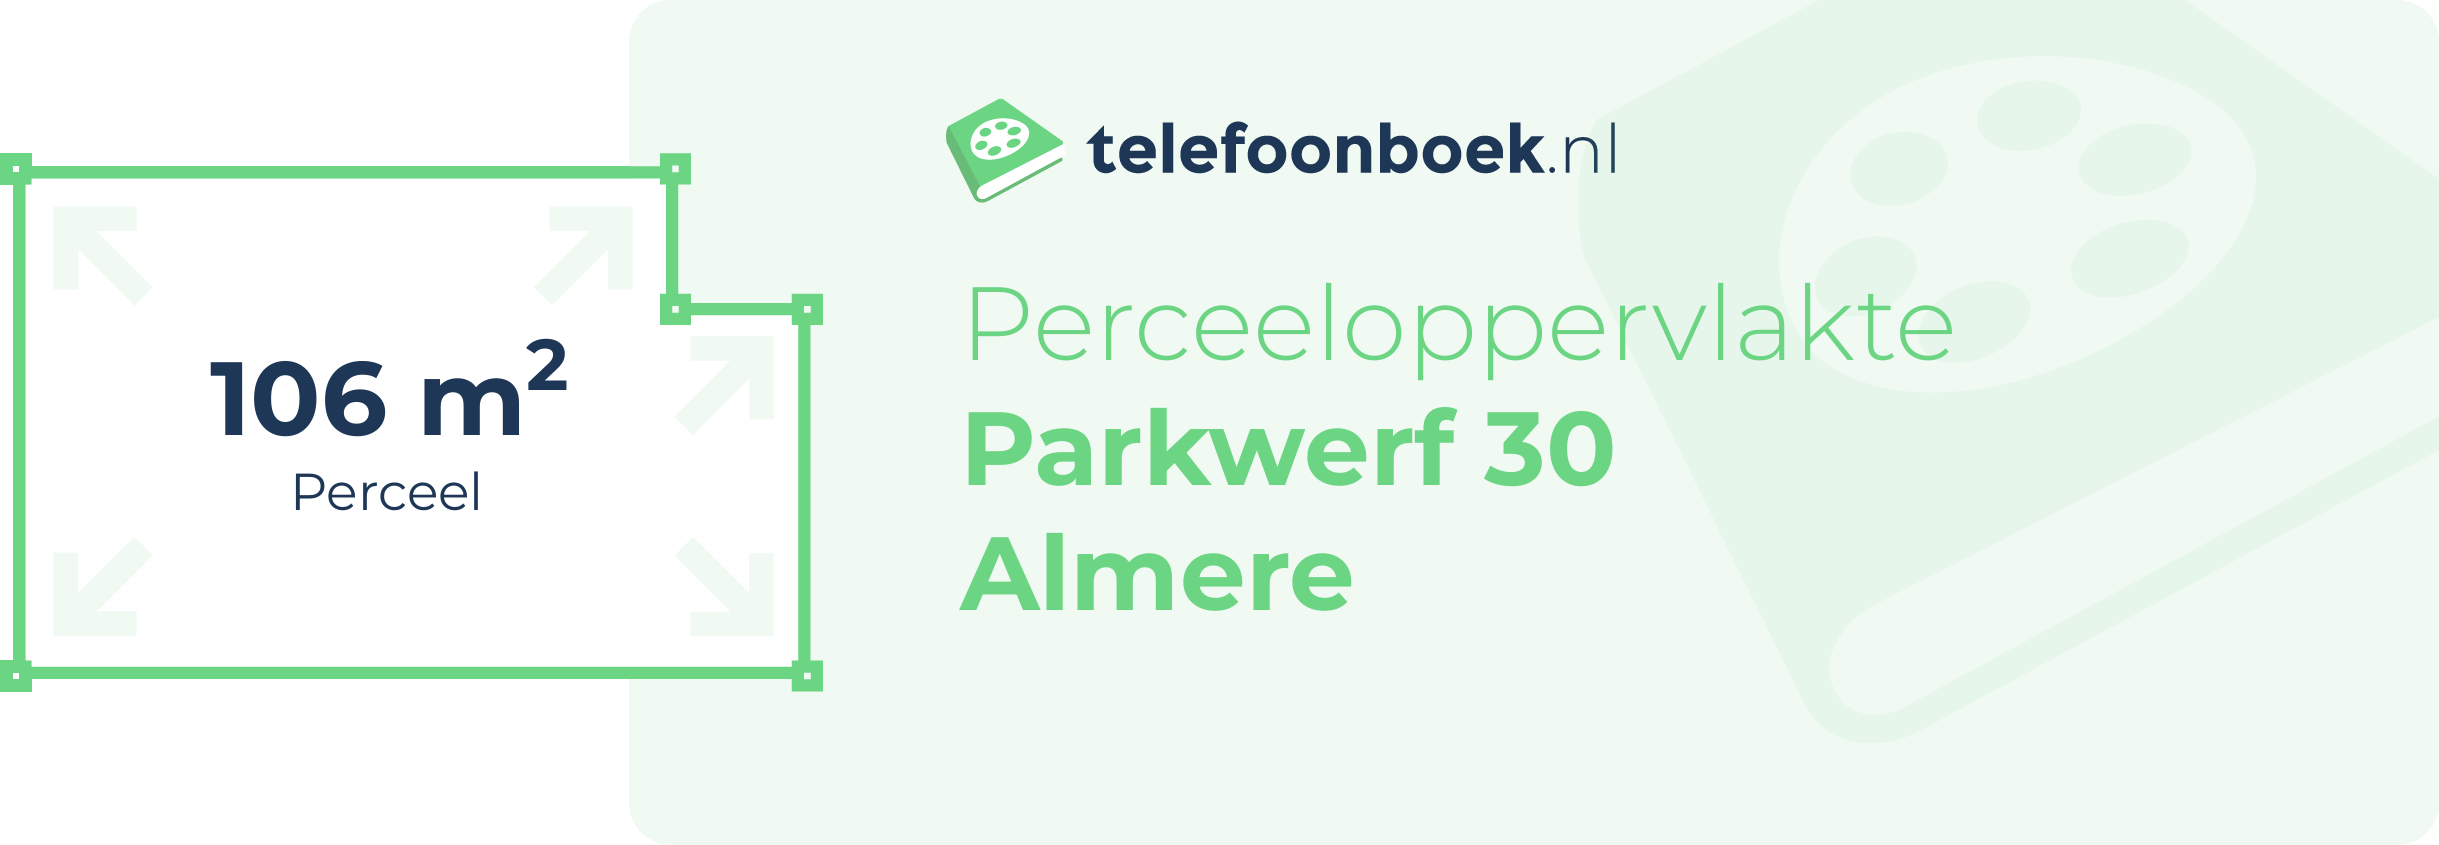 Perceeloppervlakte Parkwerf 30 Almere